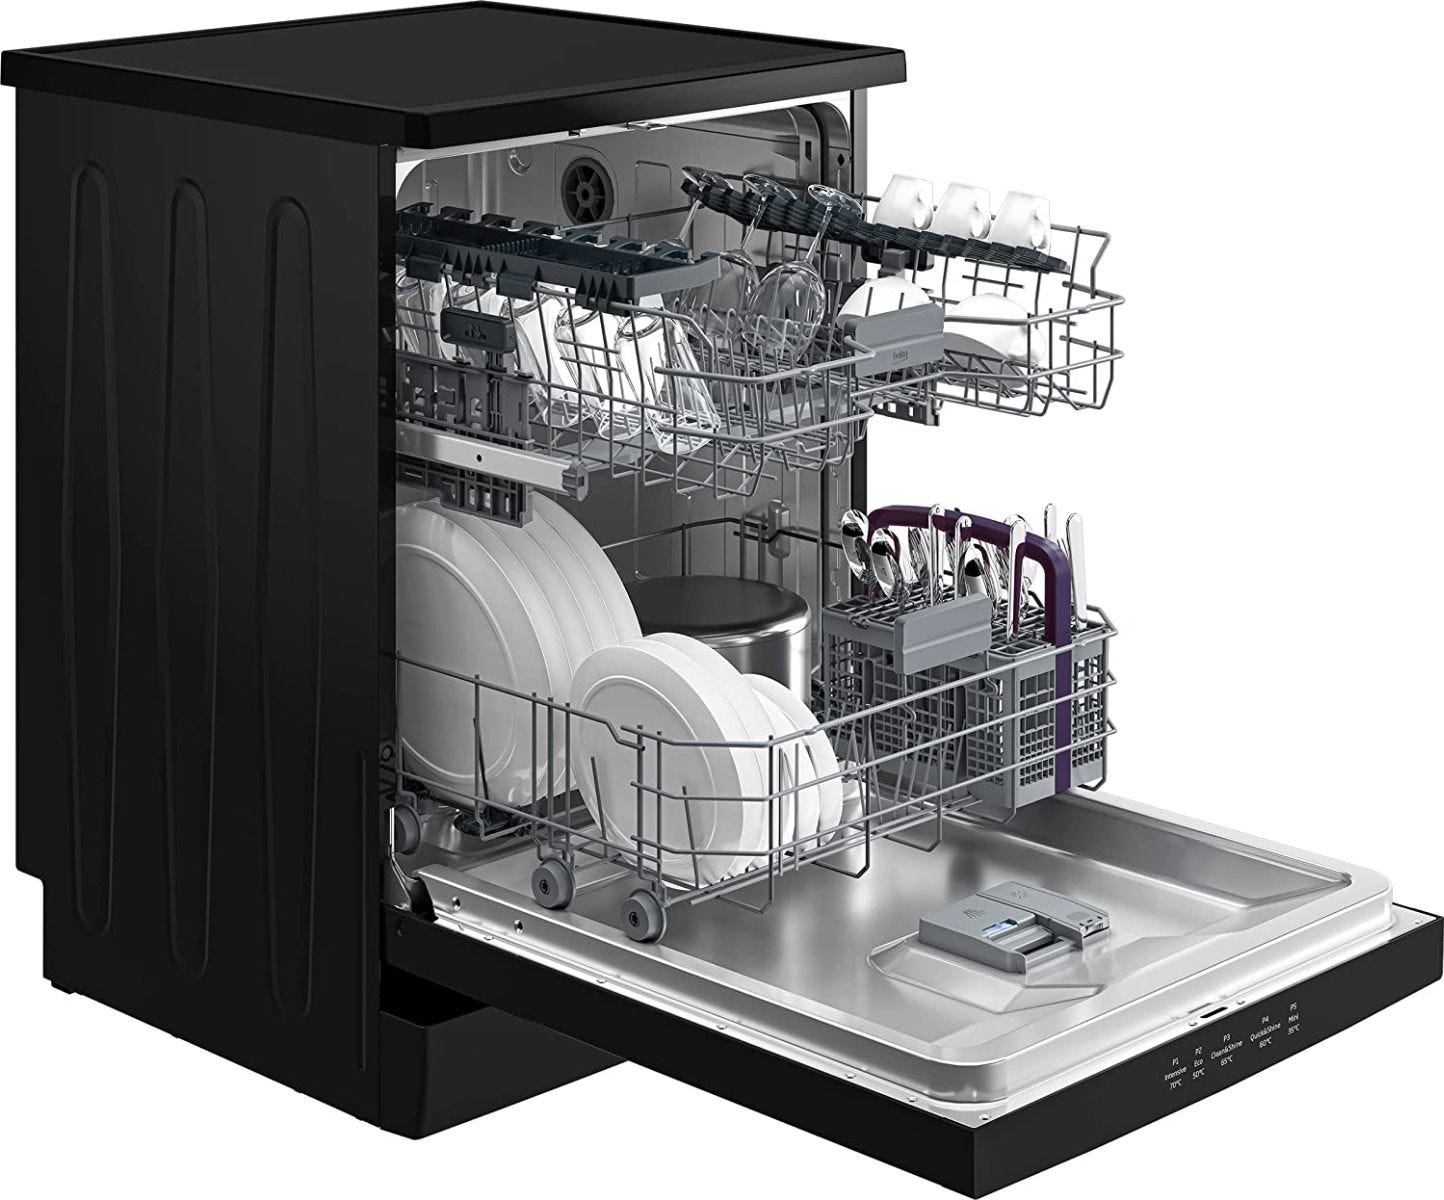 Beko Digital Dishwasher, 14 Place Settings, 5 Programs, Black - BDFN15420B